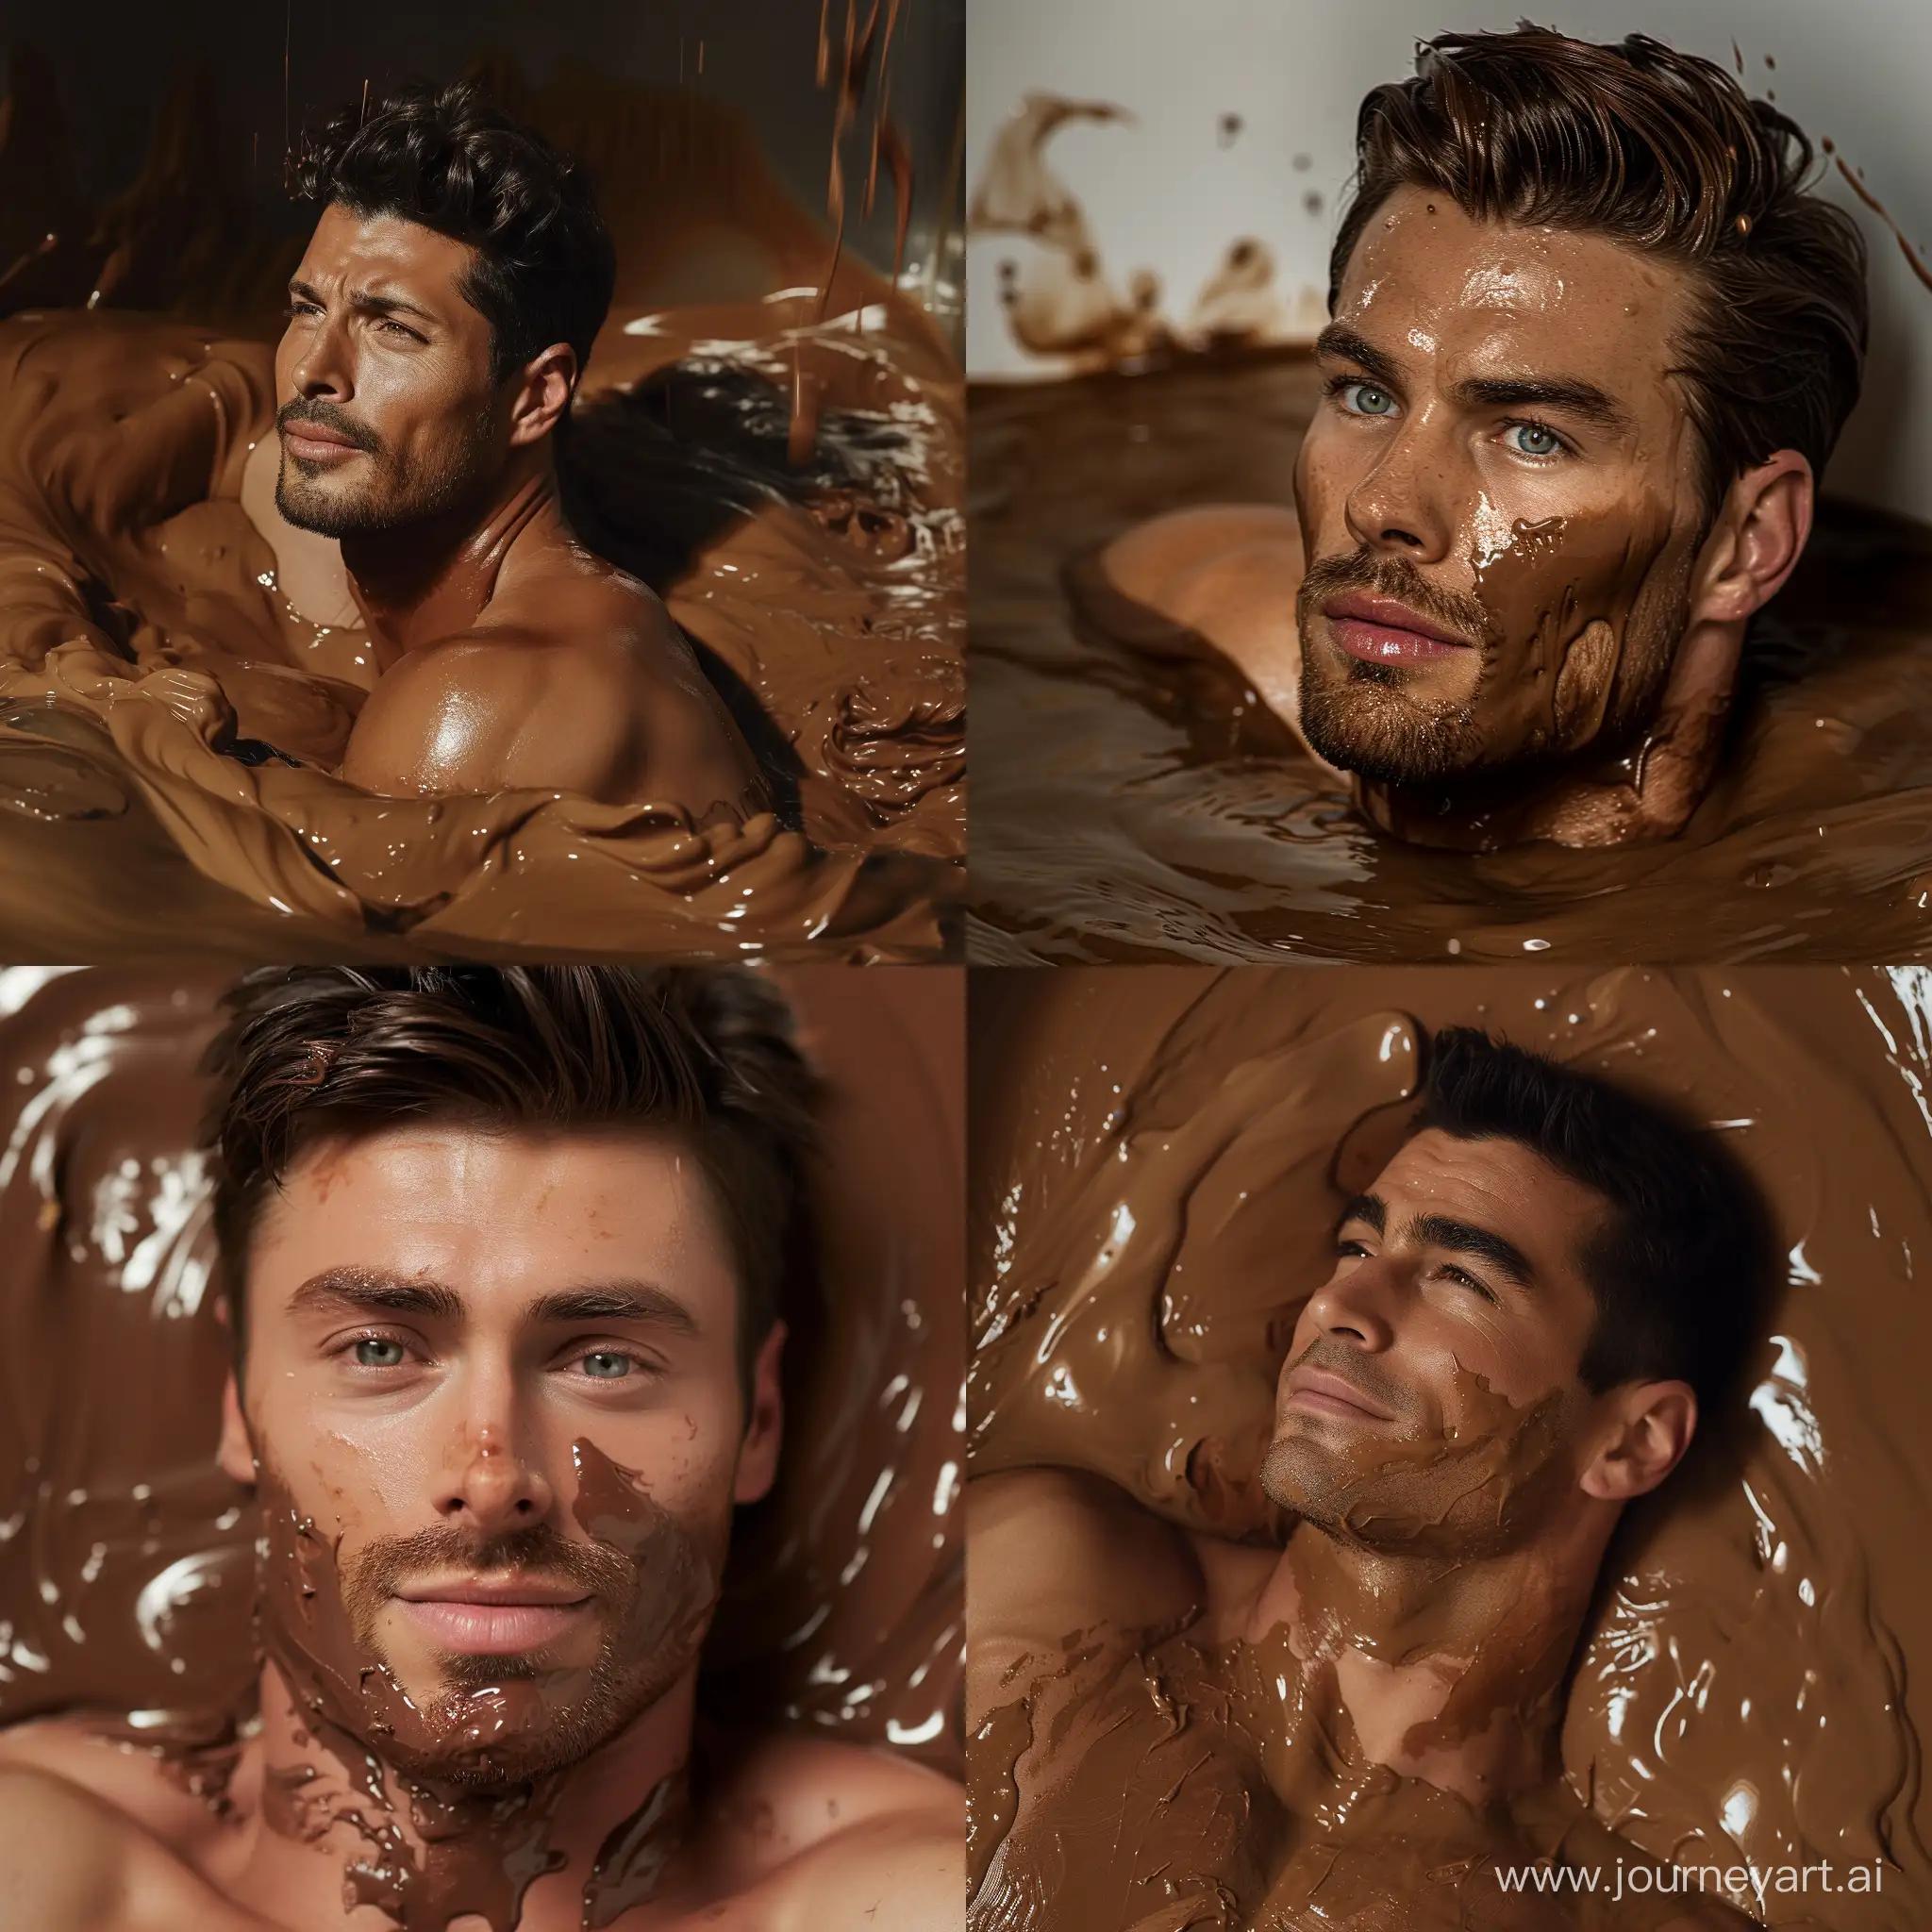 Charming-Man-Enjoying-a-Luxurious-Chocolate-Bath